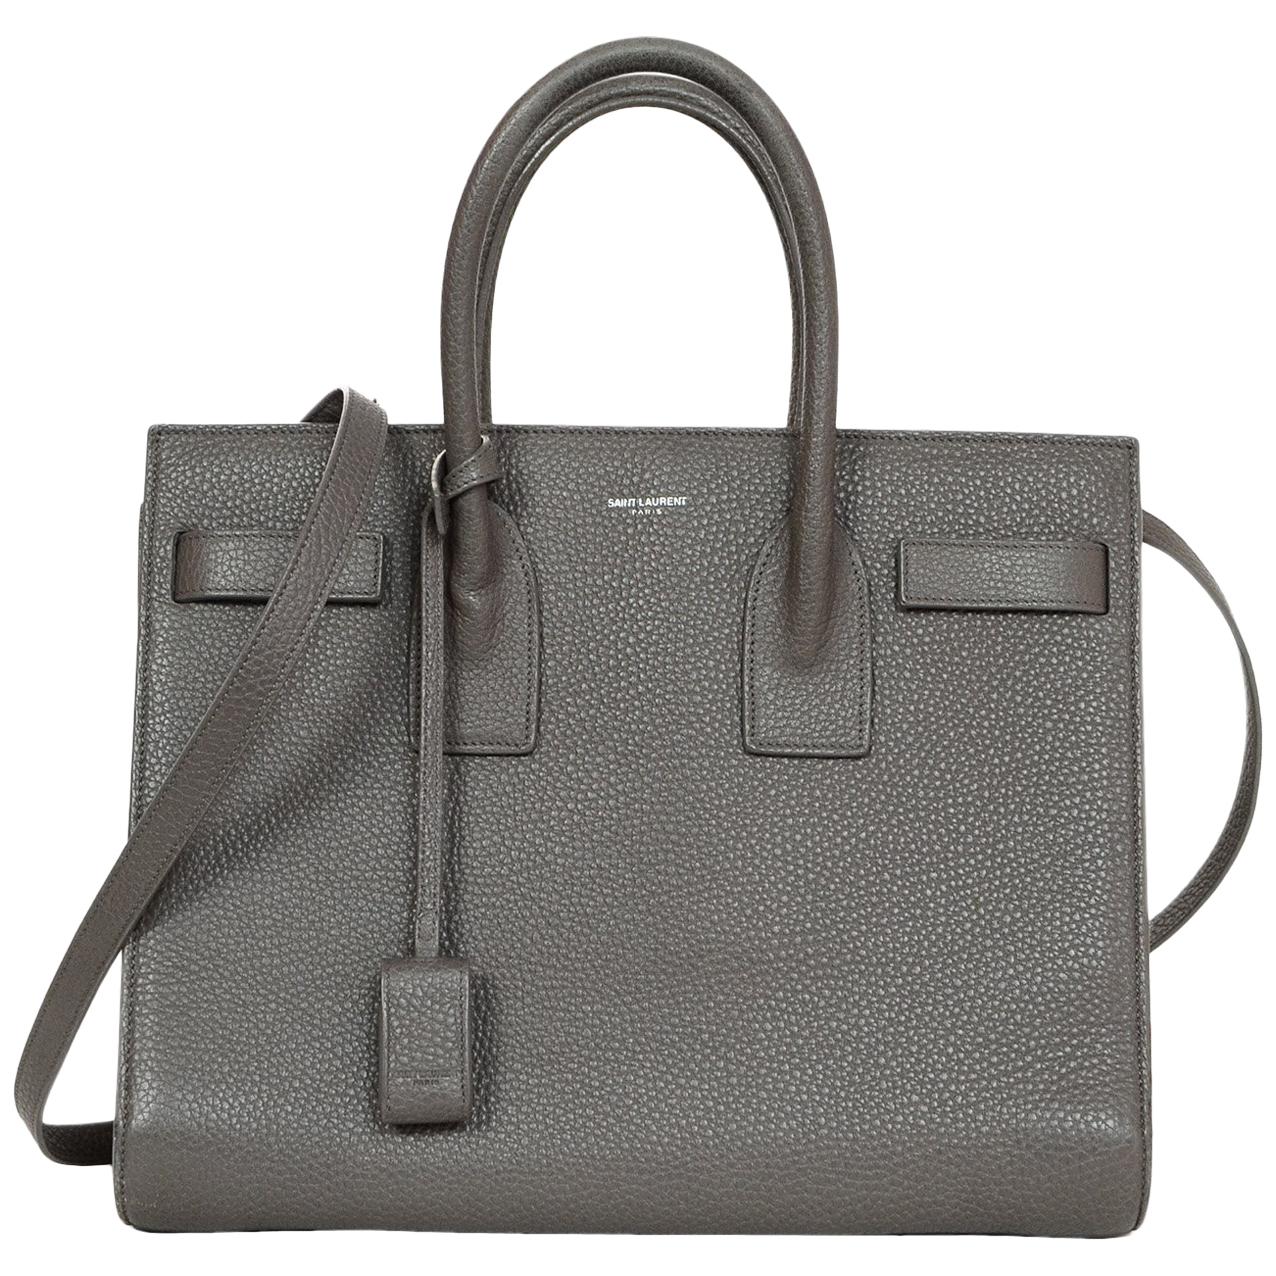 YSL Yves Saint Laurent Grey Pebbled Leather Small Sac De Jour Tote Bag